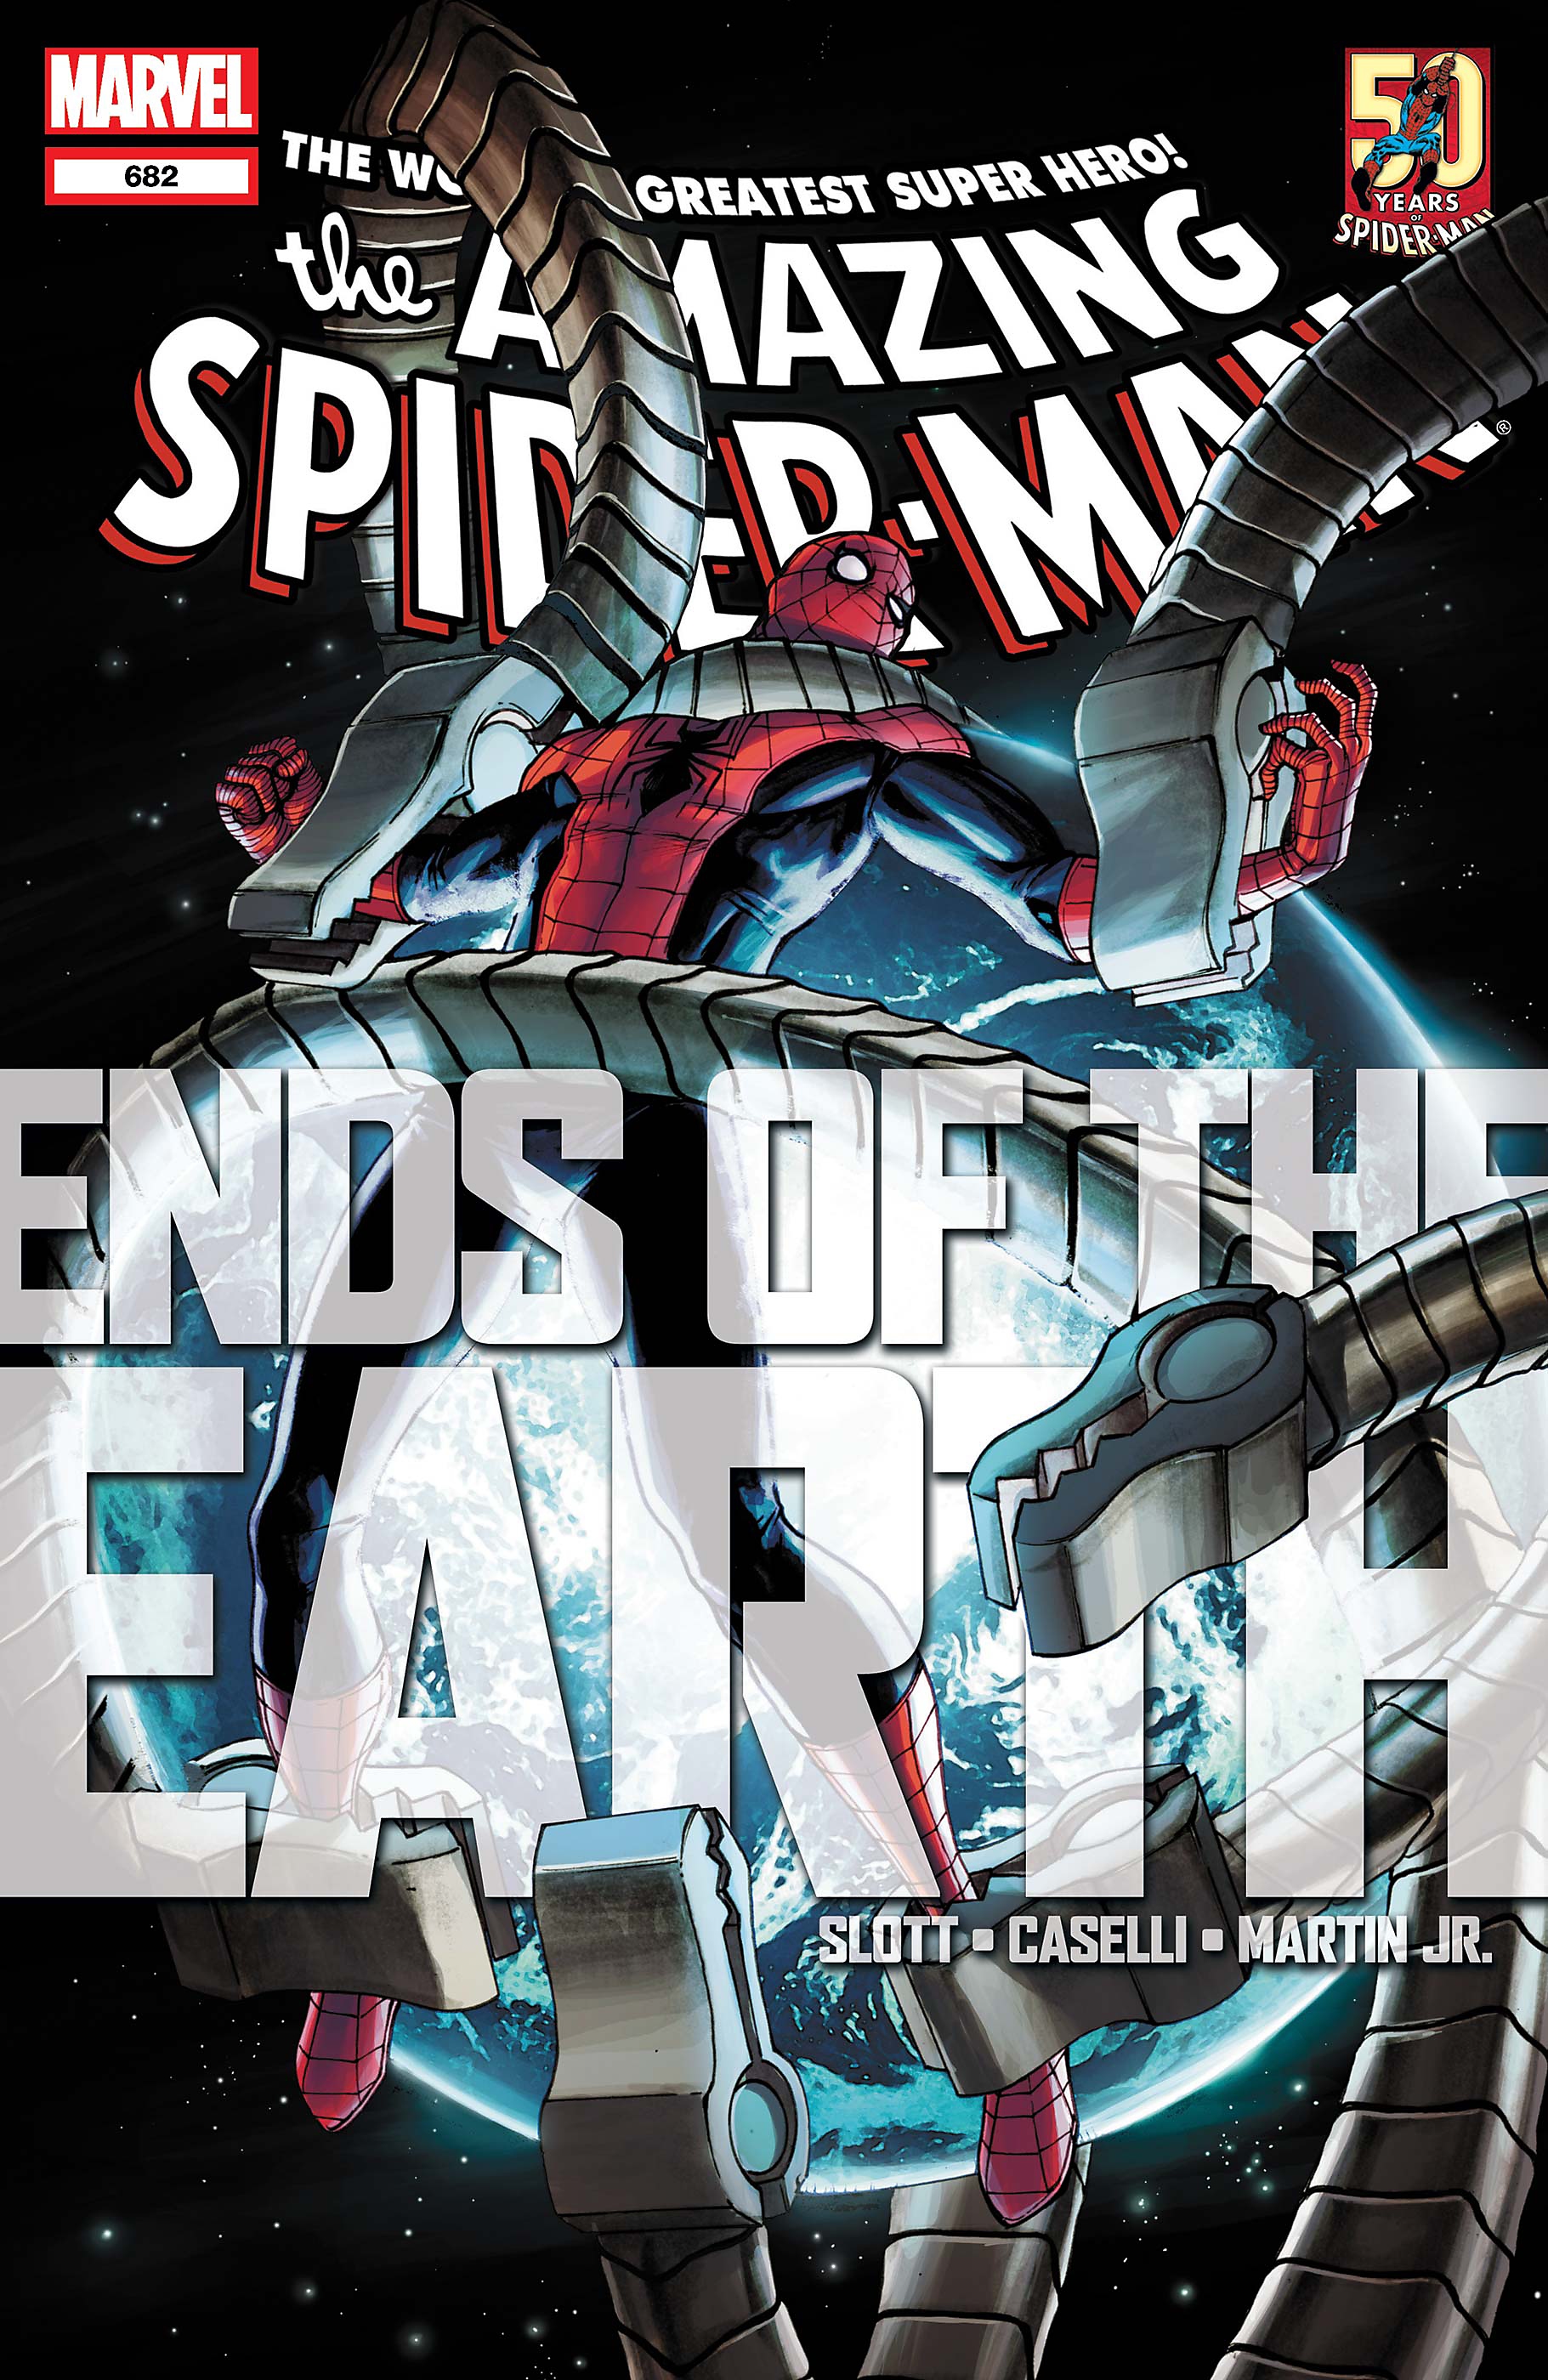 spider-man silver lining lista za čitanje stripova